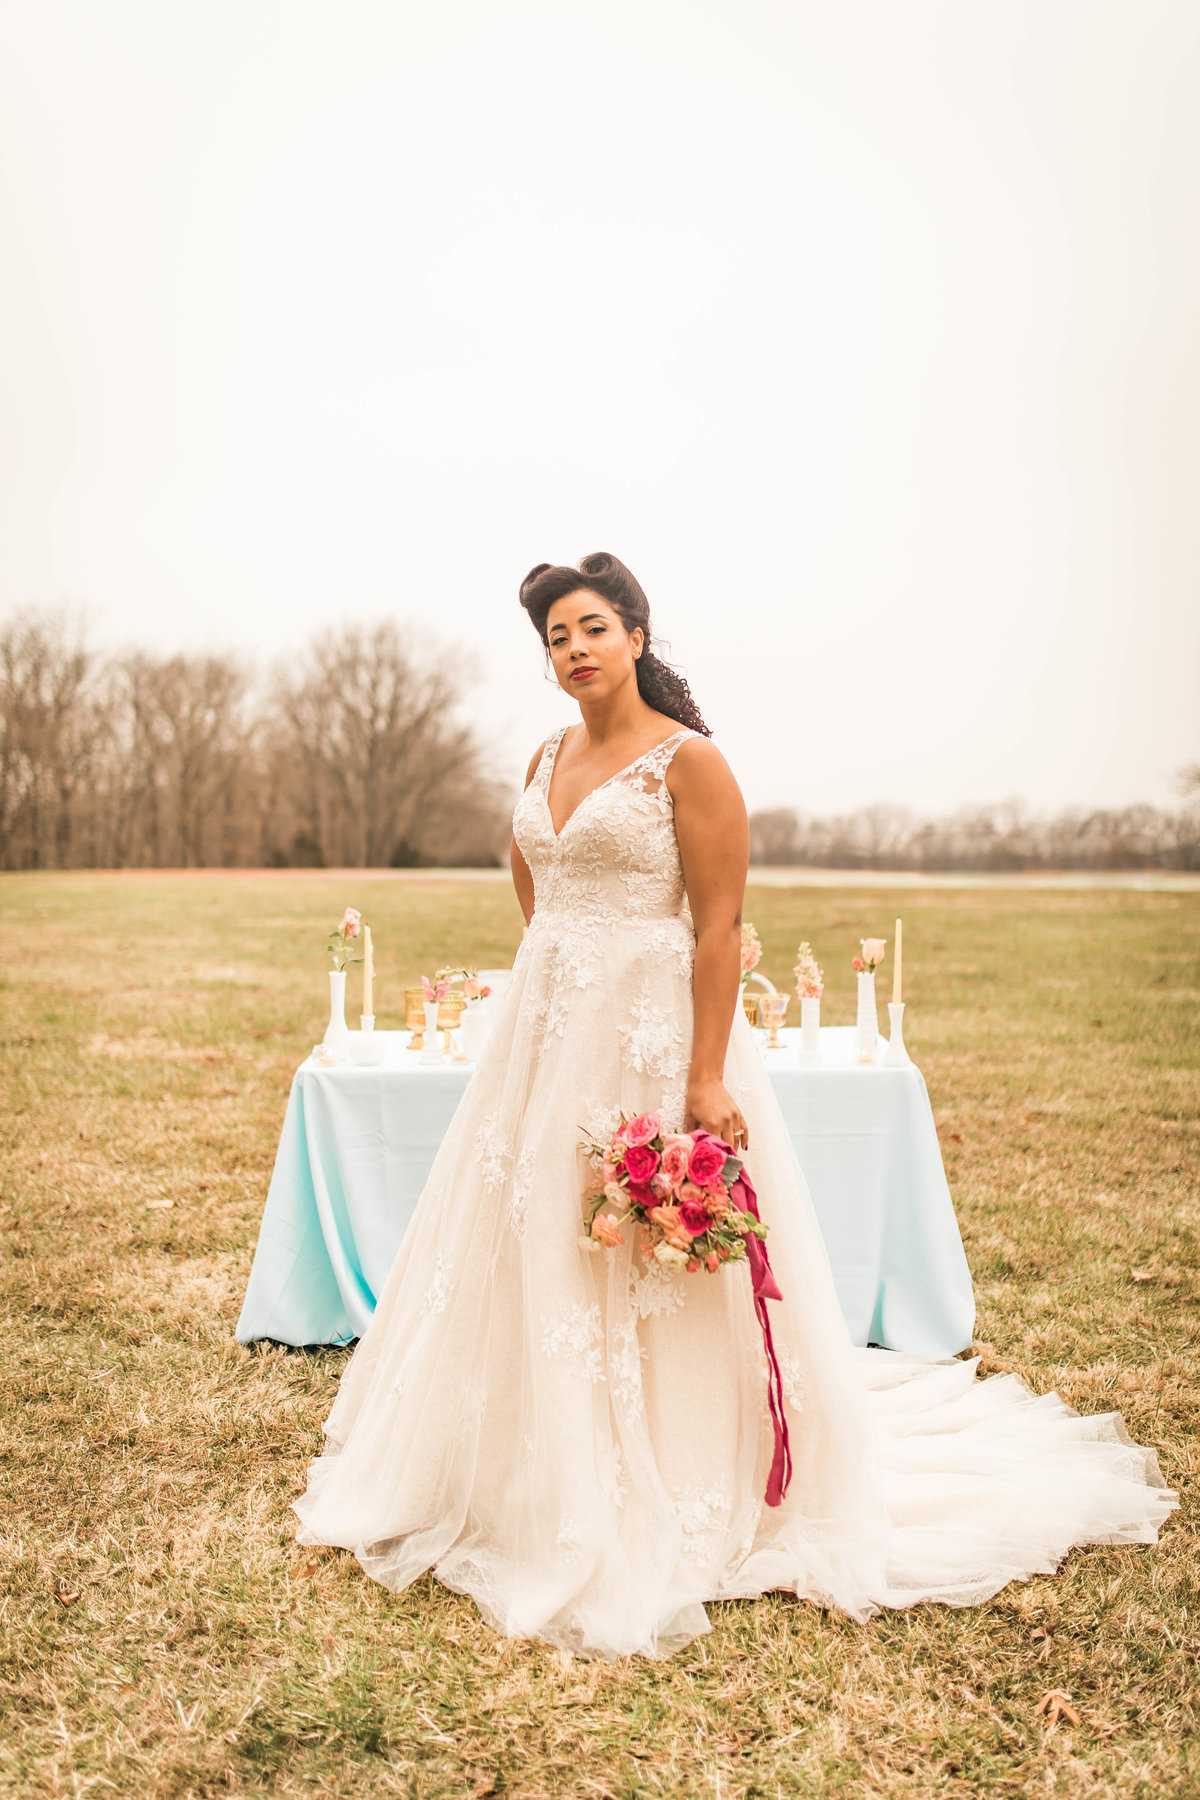 Retro Styled Shoot - Sophia and Andrew - St Louis Wedding Photographer - Allison Slater Photography 112